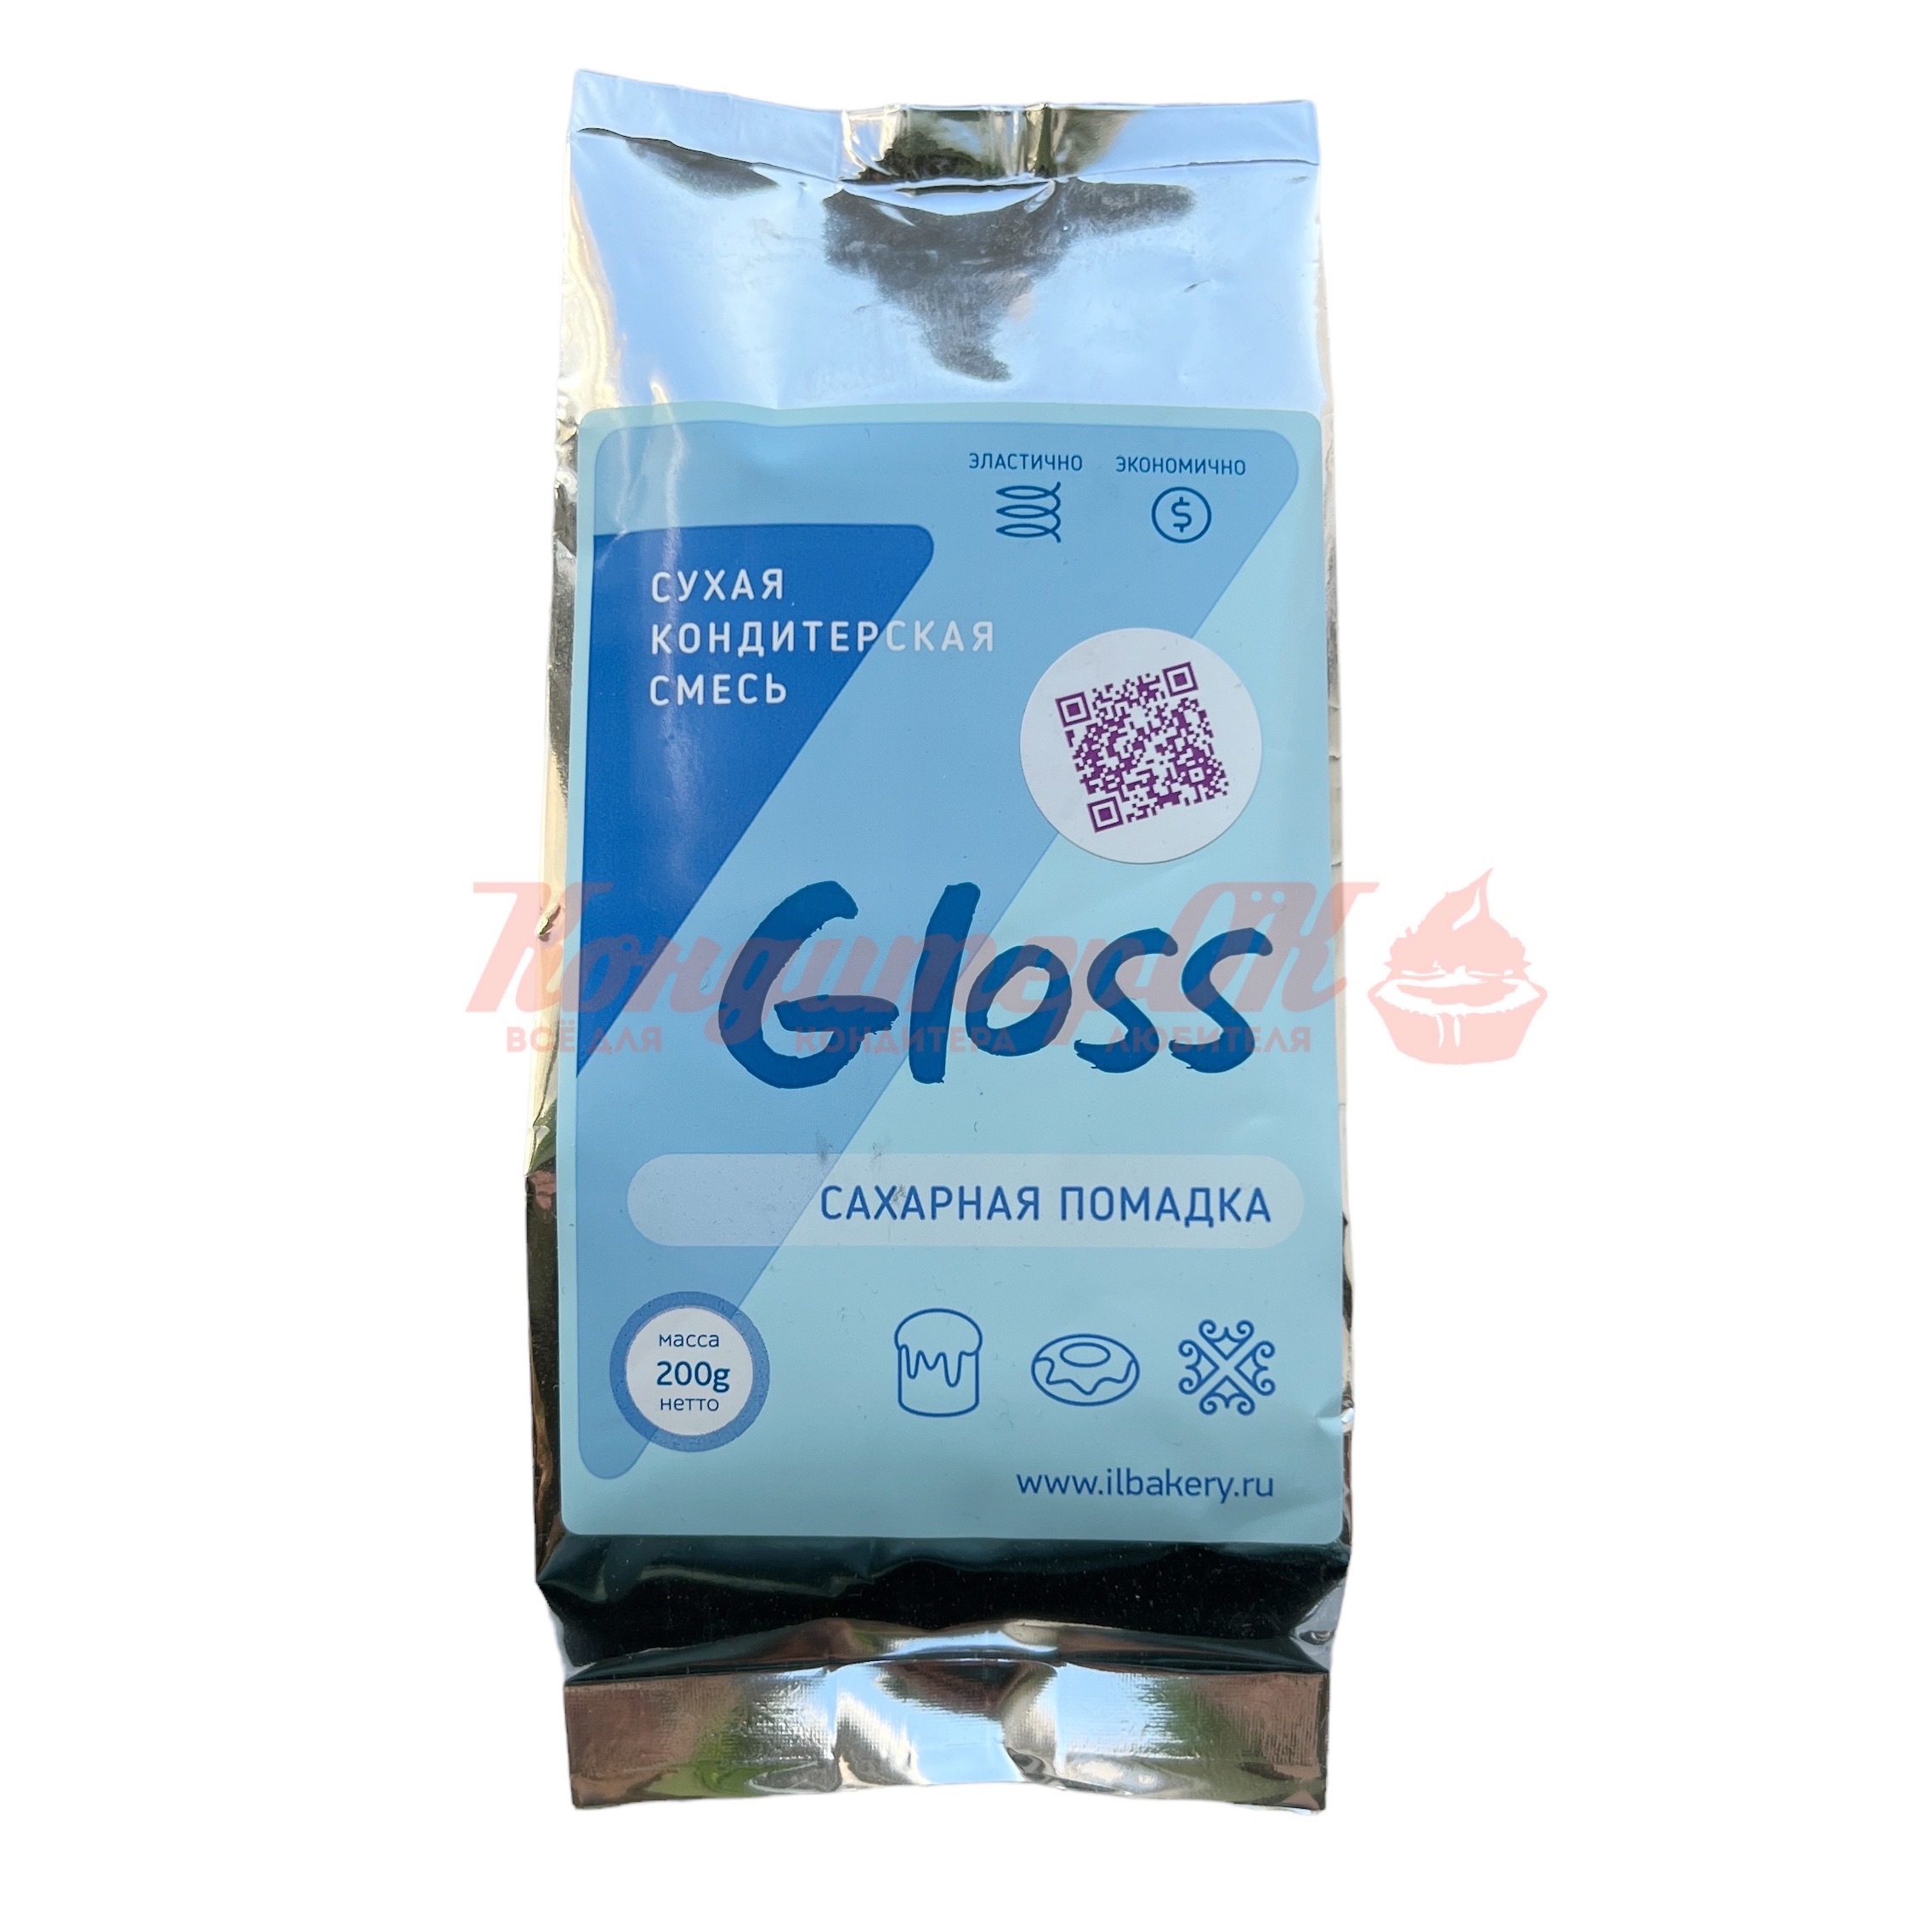 IL - Gloss (сахарная помадка) 200 г